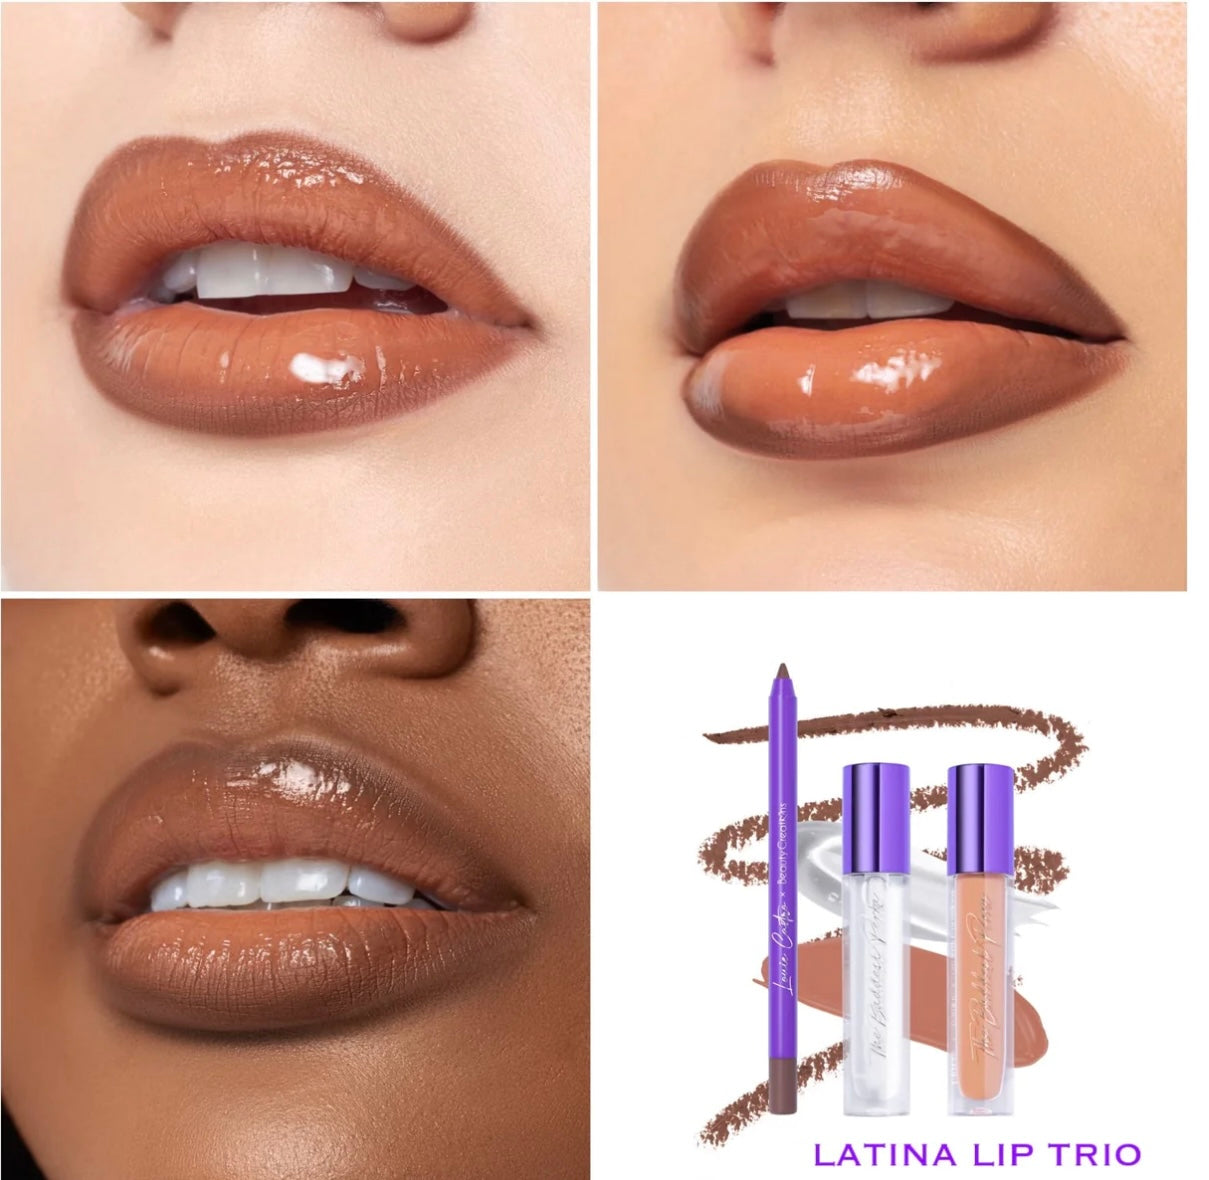 Latina lipstick trio